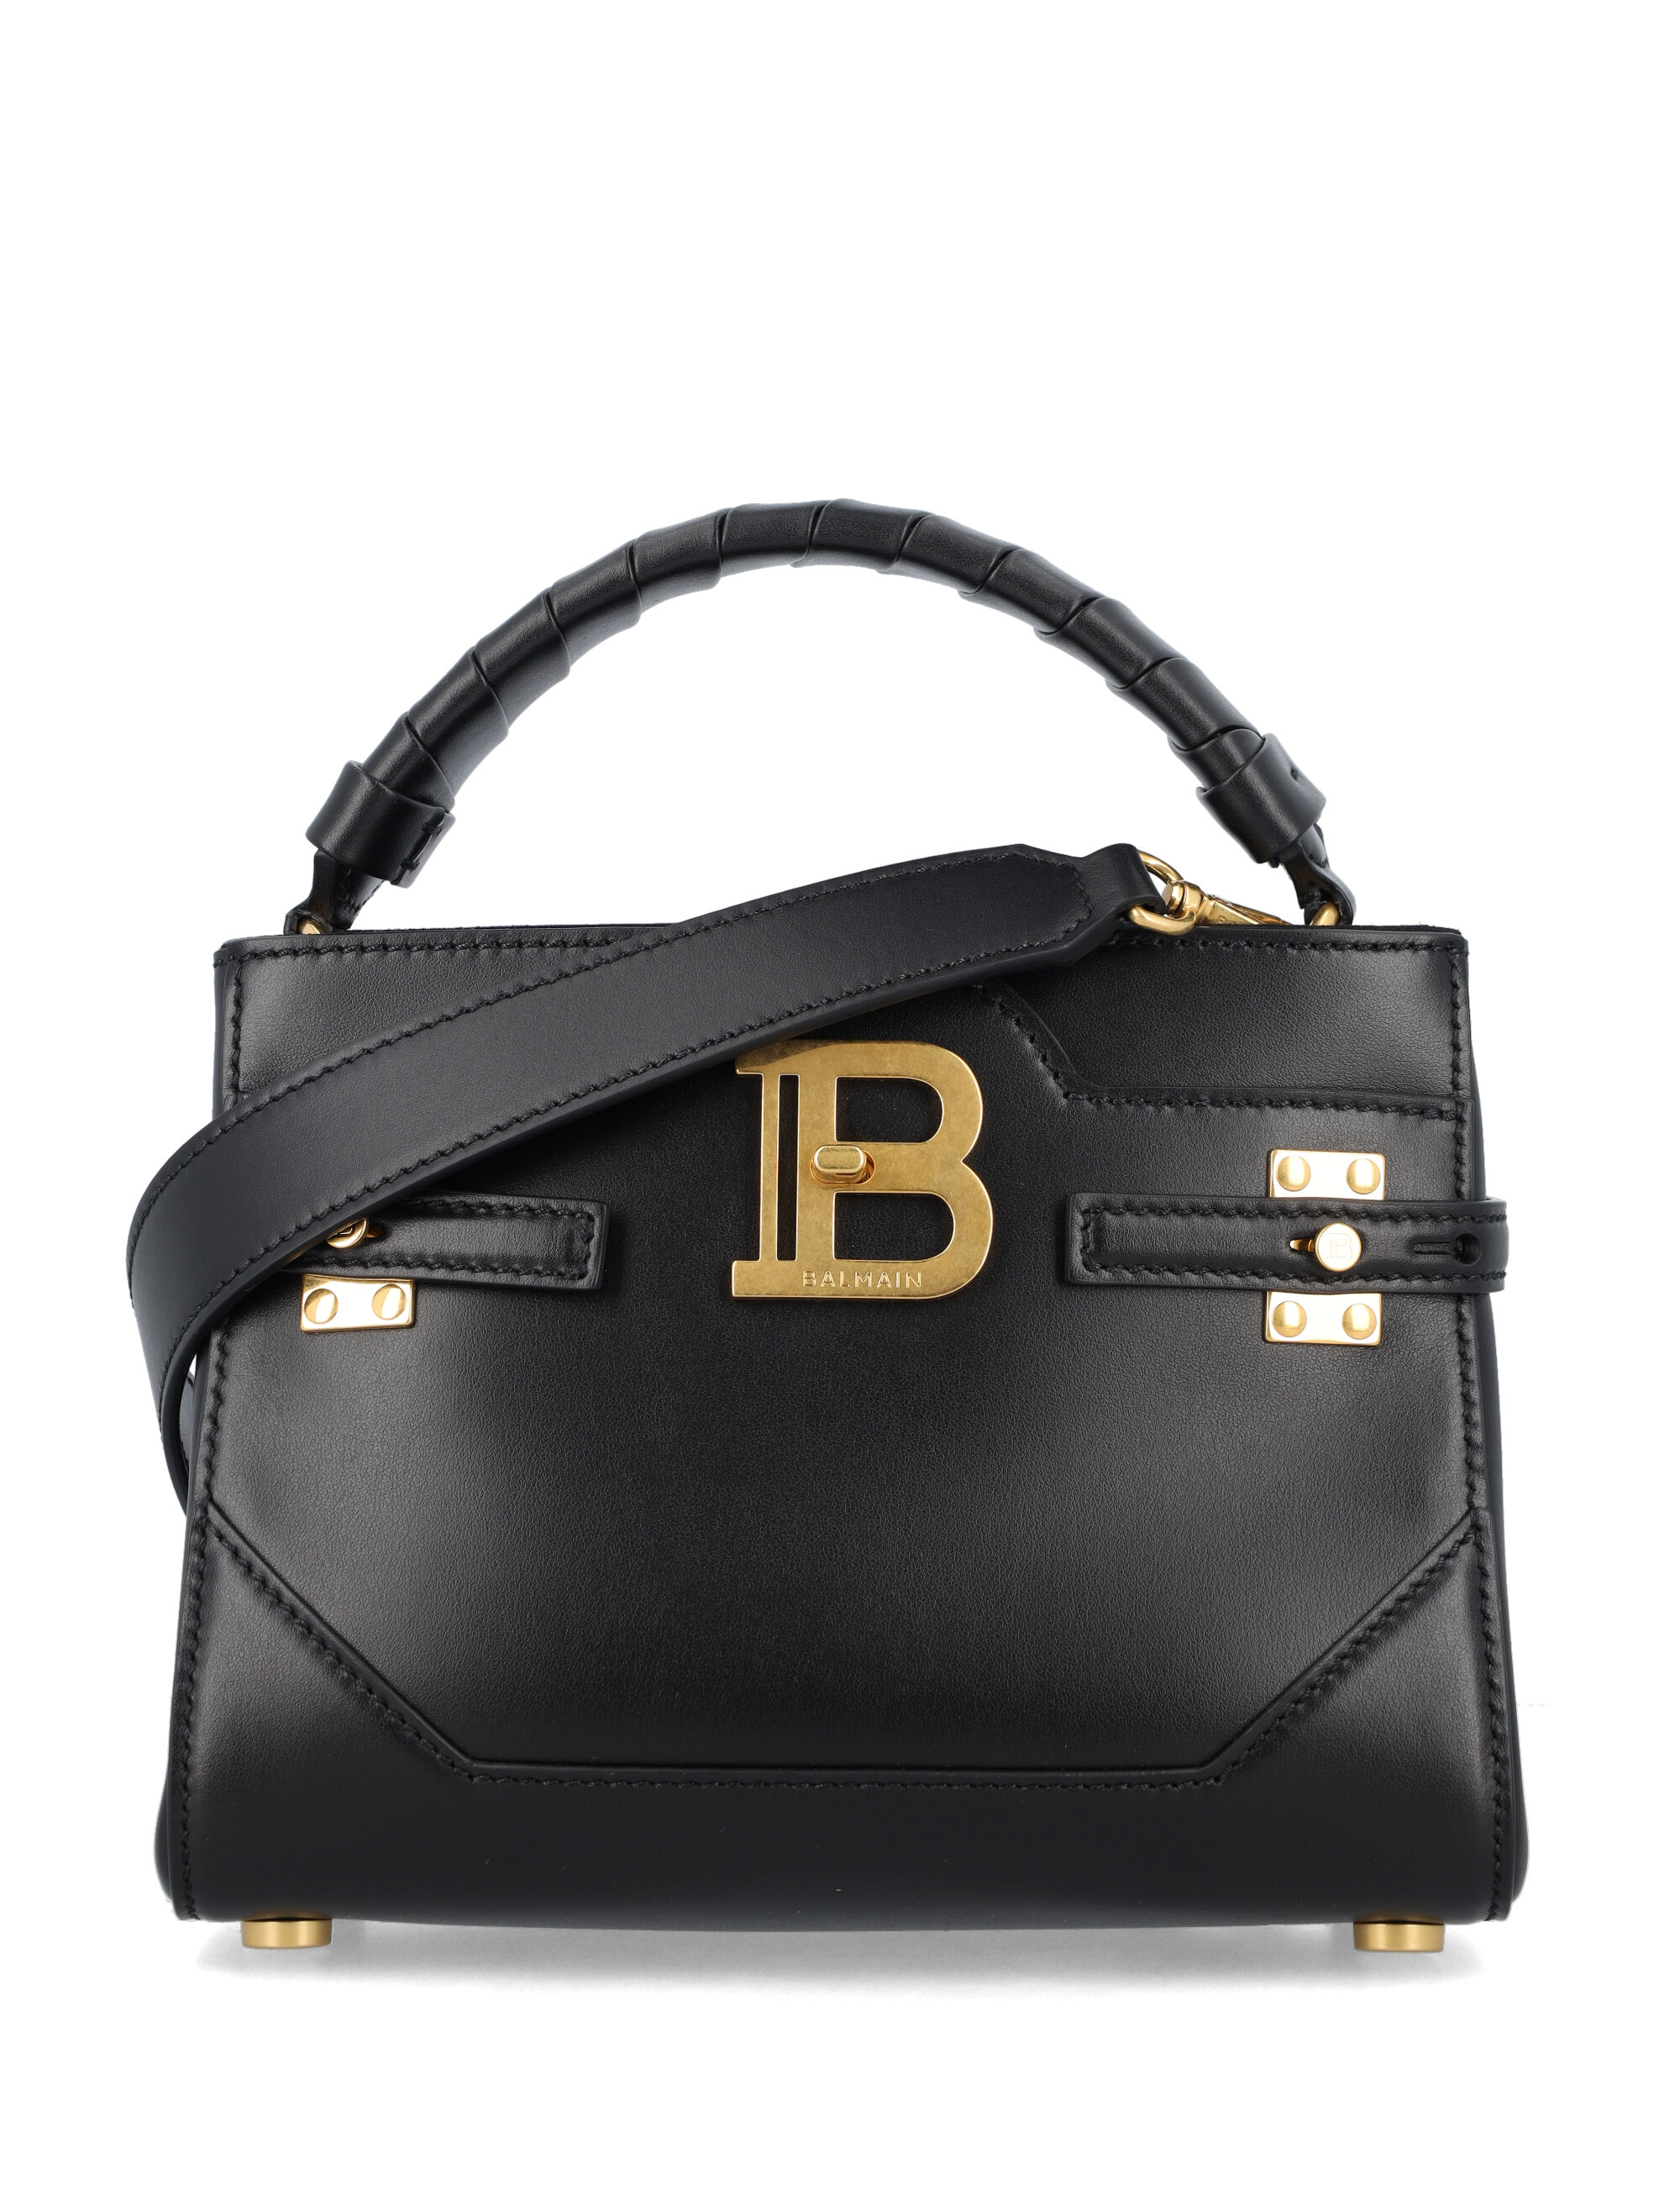 B-Buzz 22 top handle bag, color BLACK | Spazio Pritelli Official Website